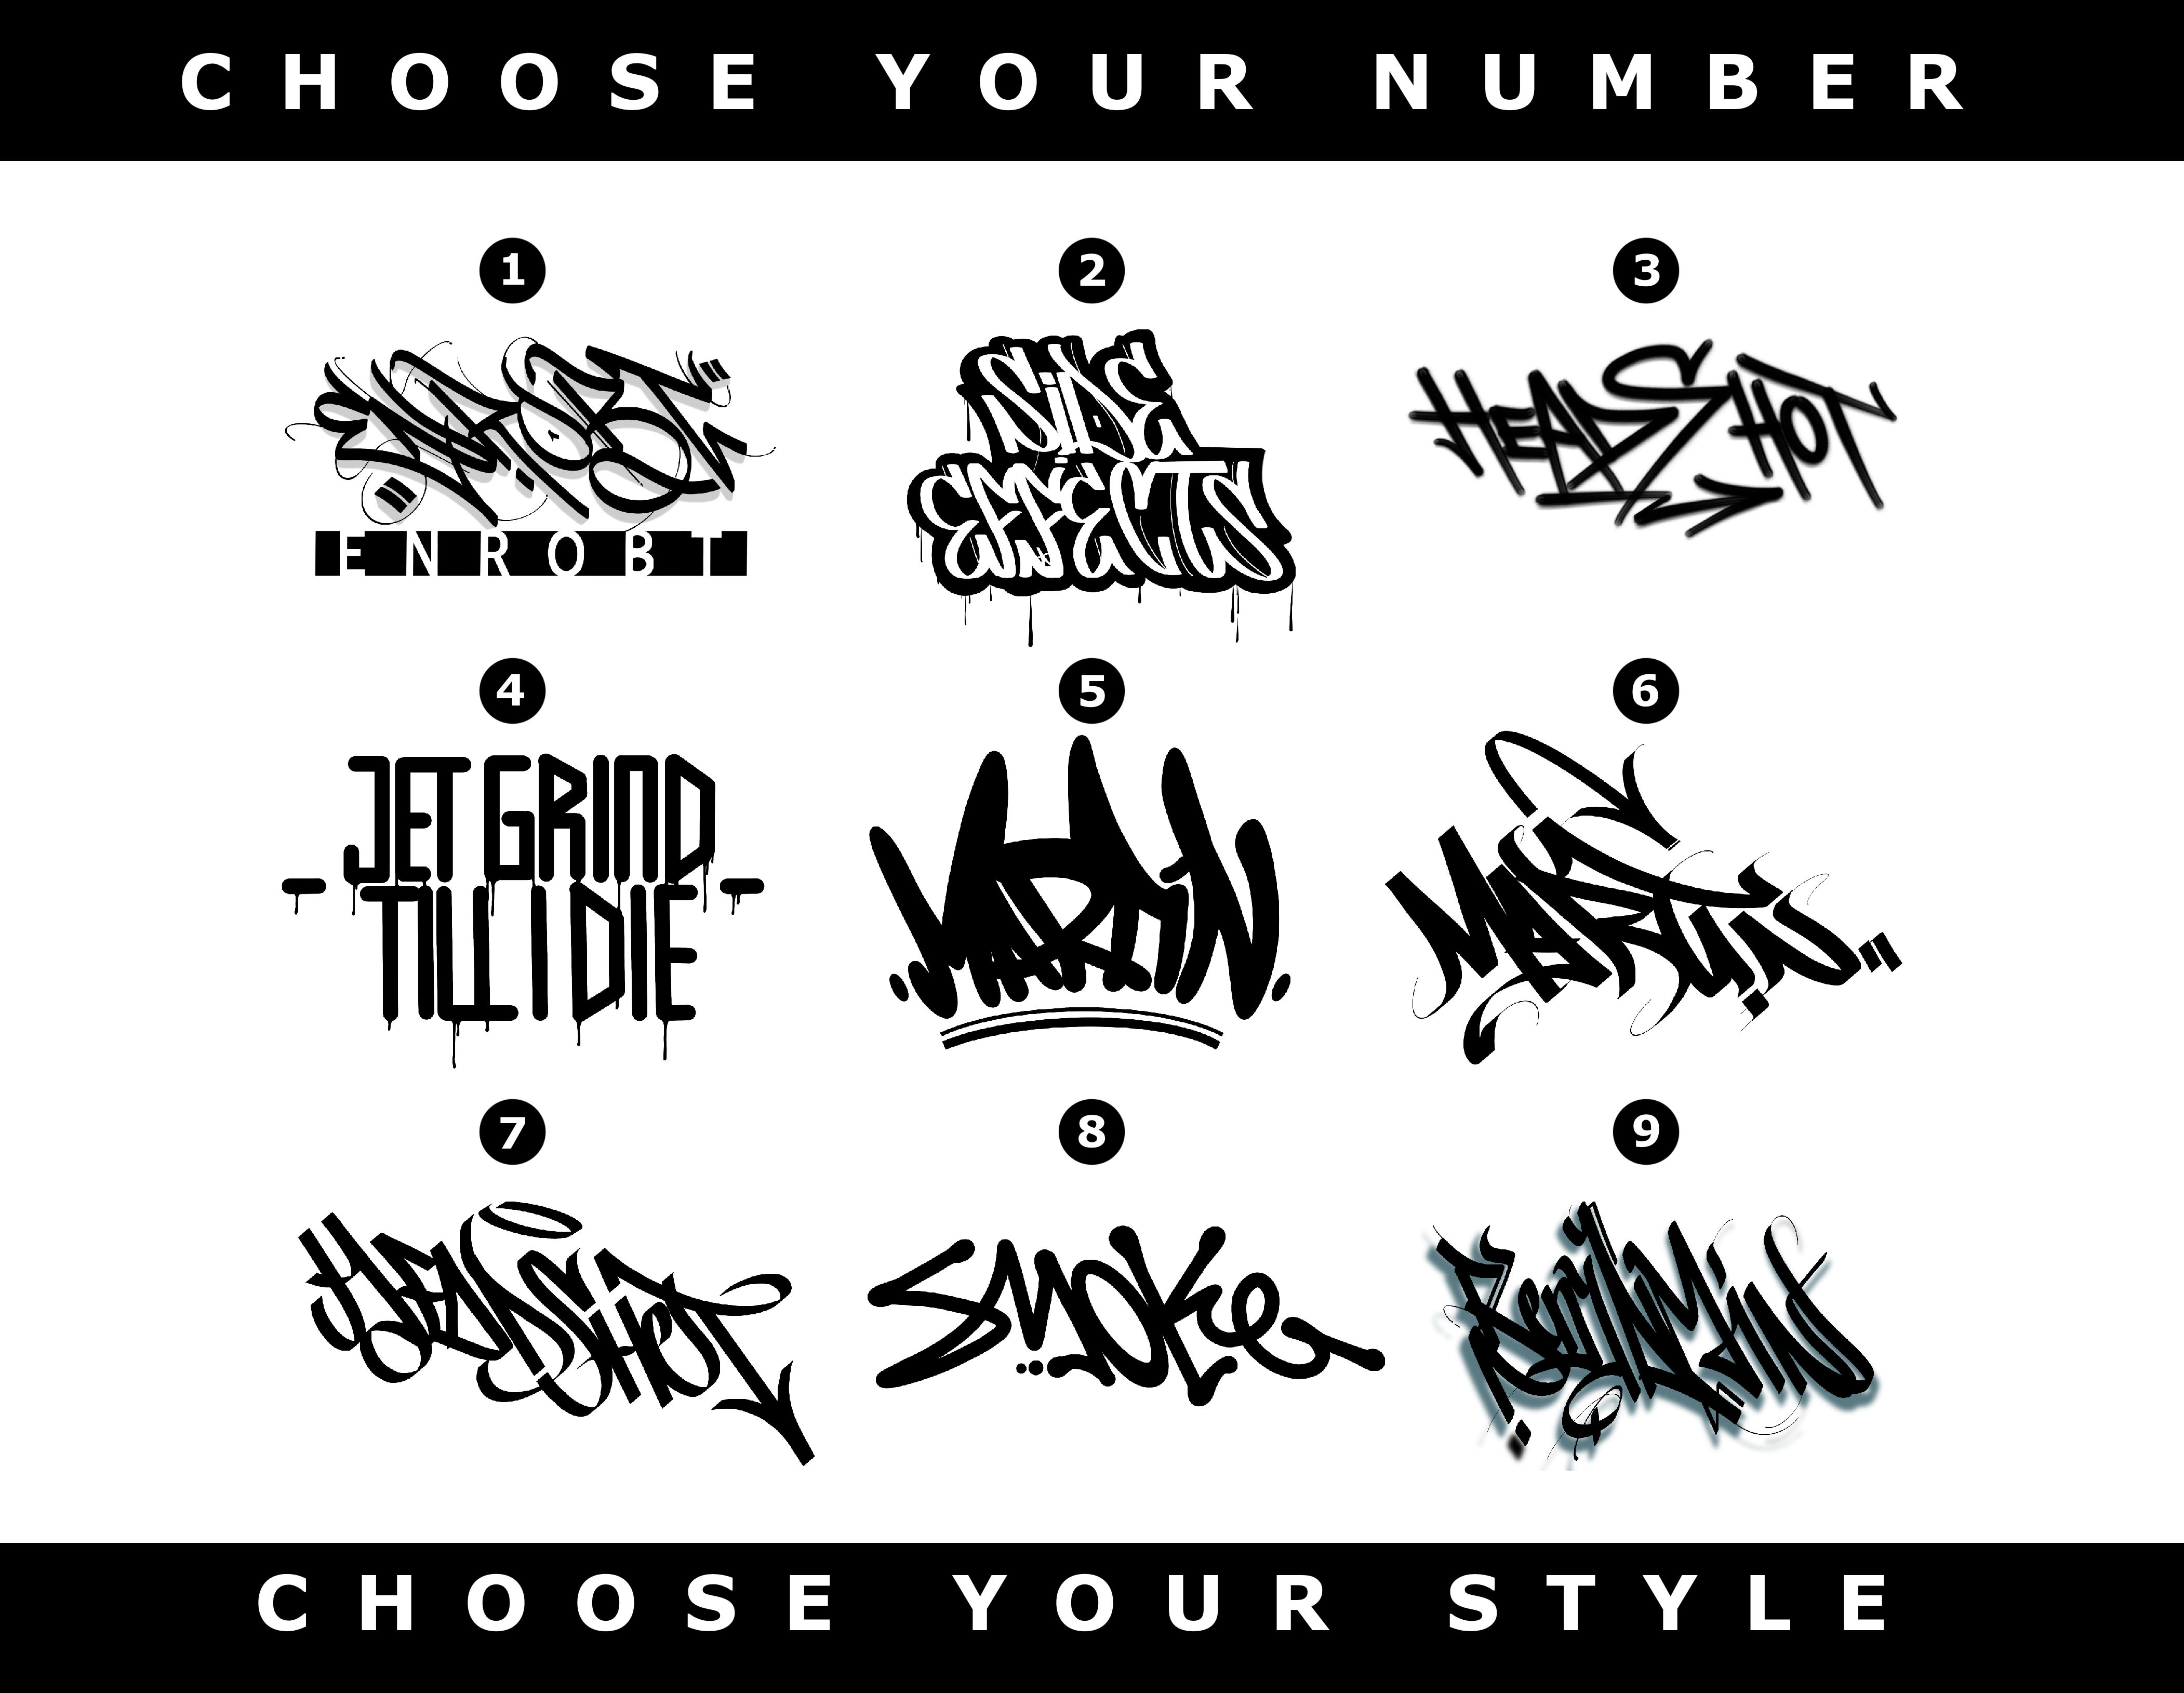 créer un logo tag graffiti votre nom